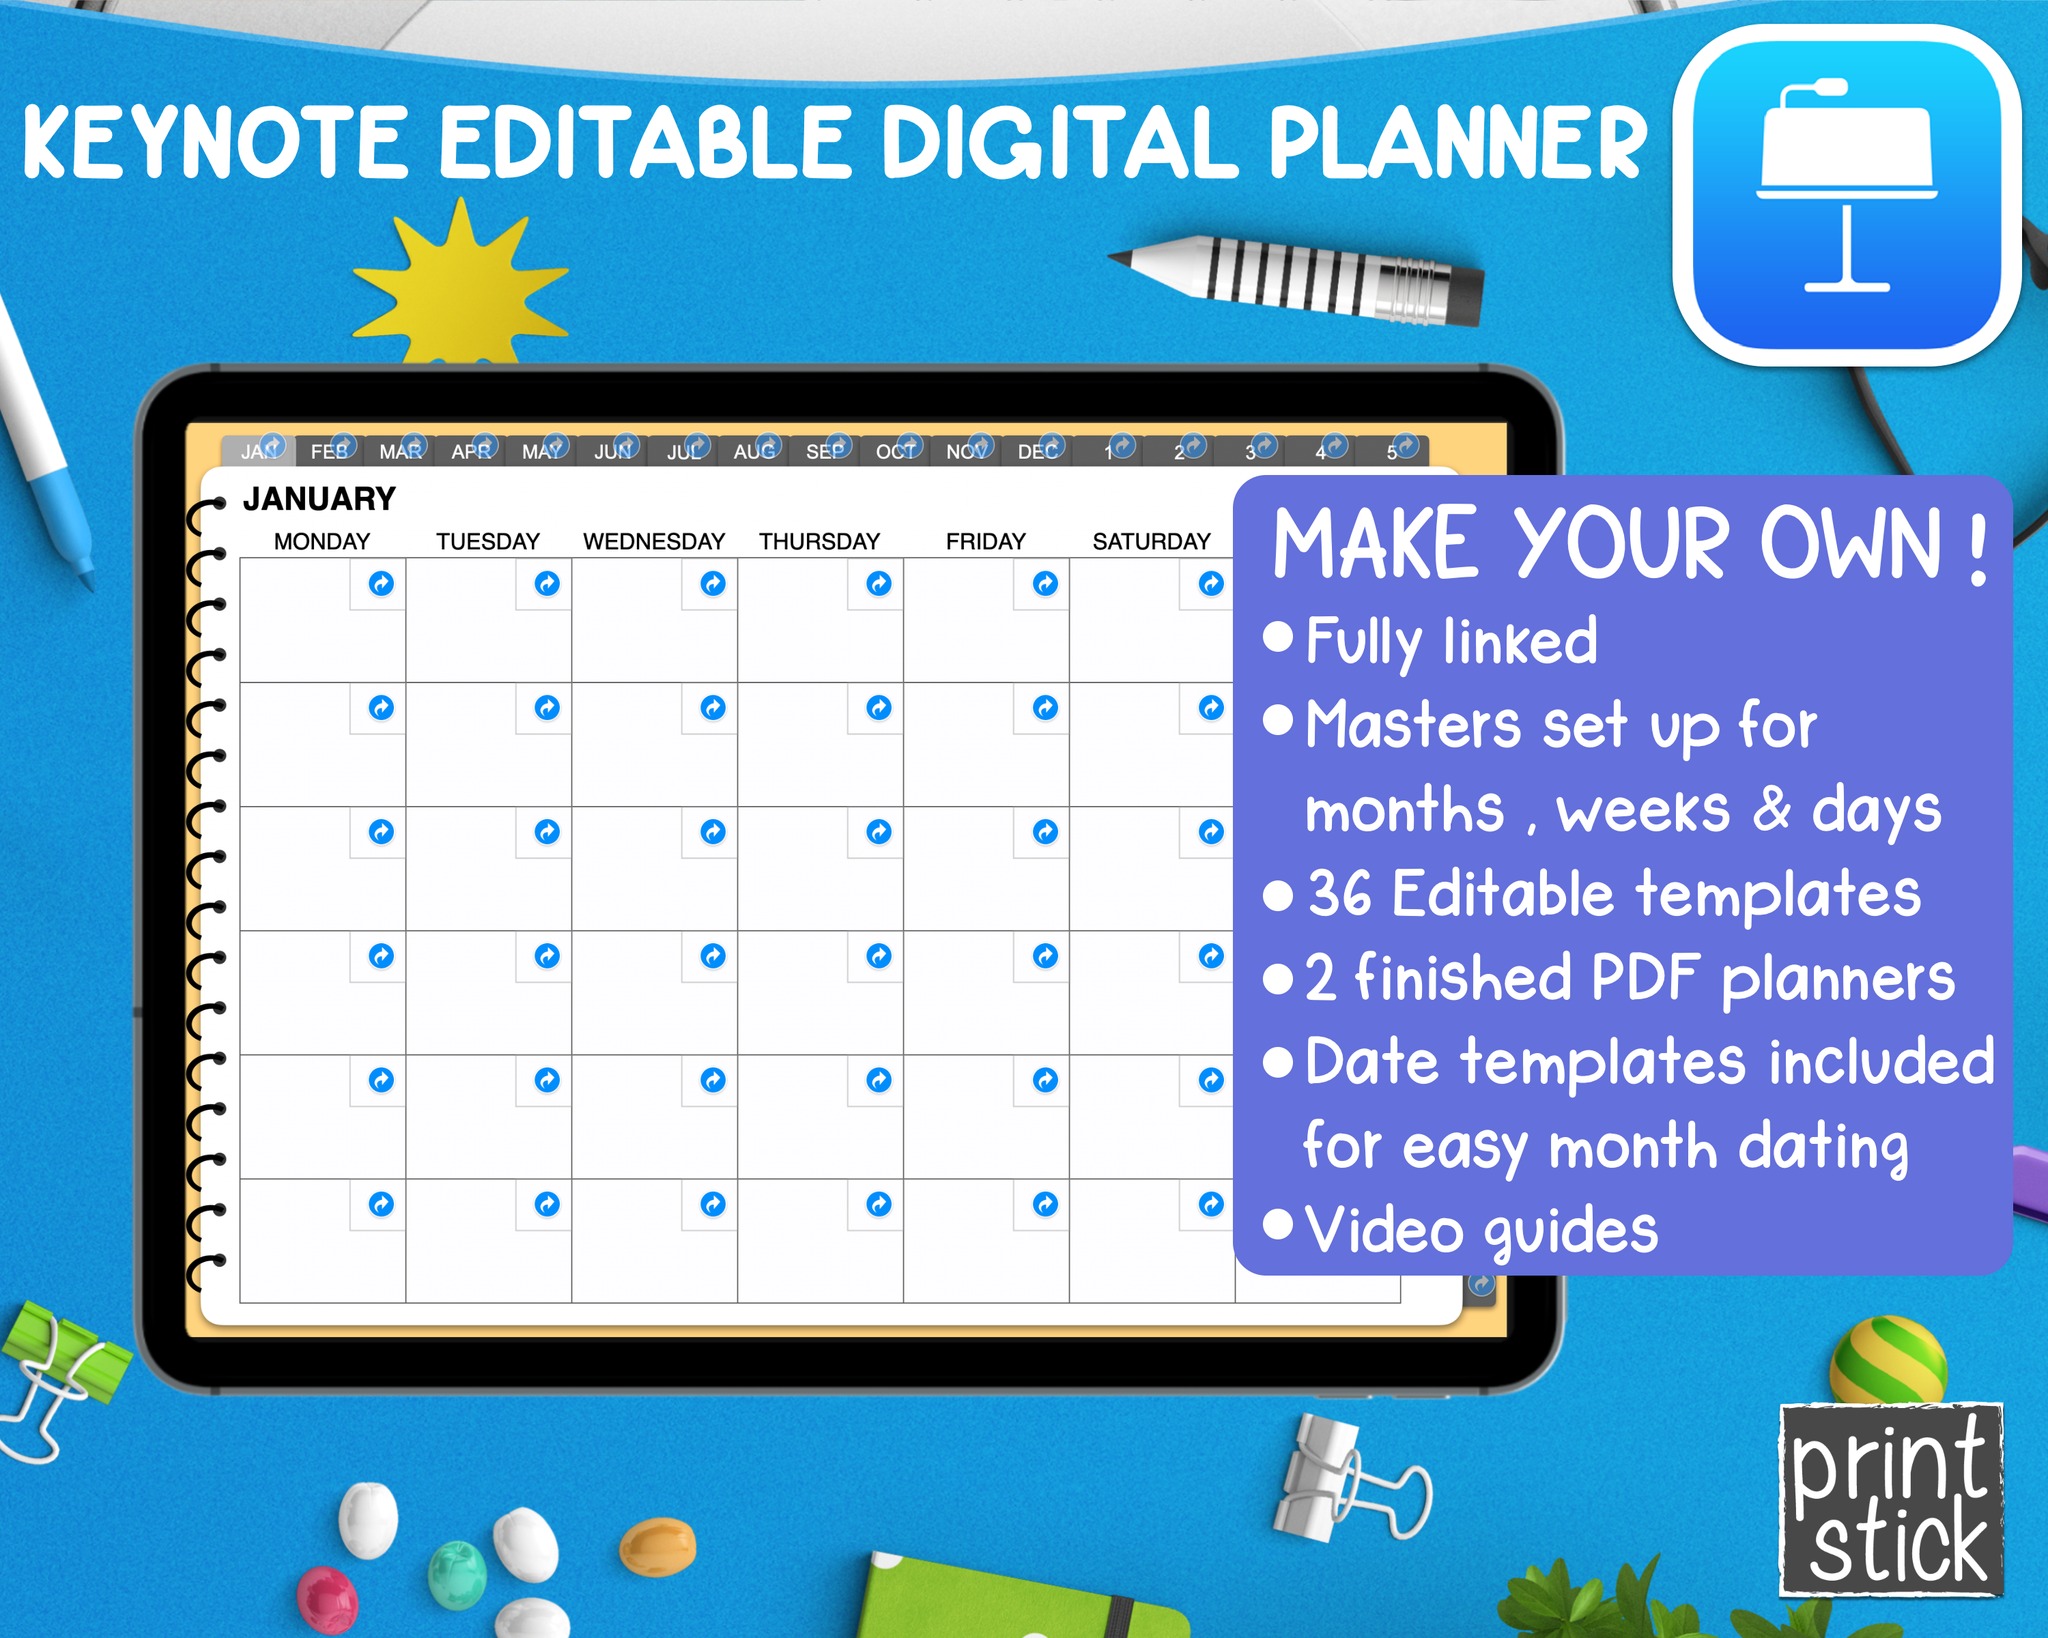 Editable Digital Planner - for Keynote - Print Stick